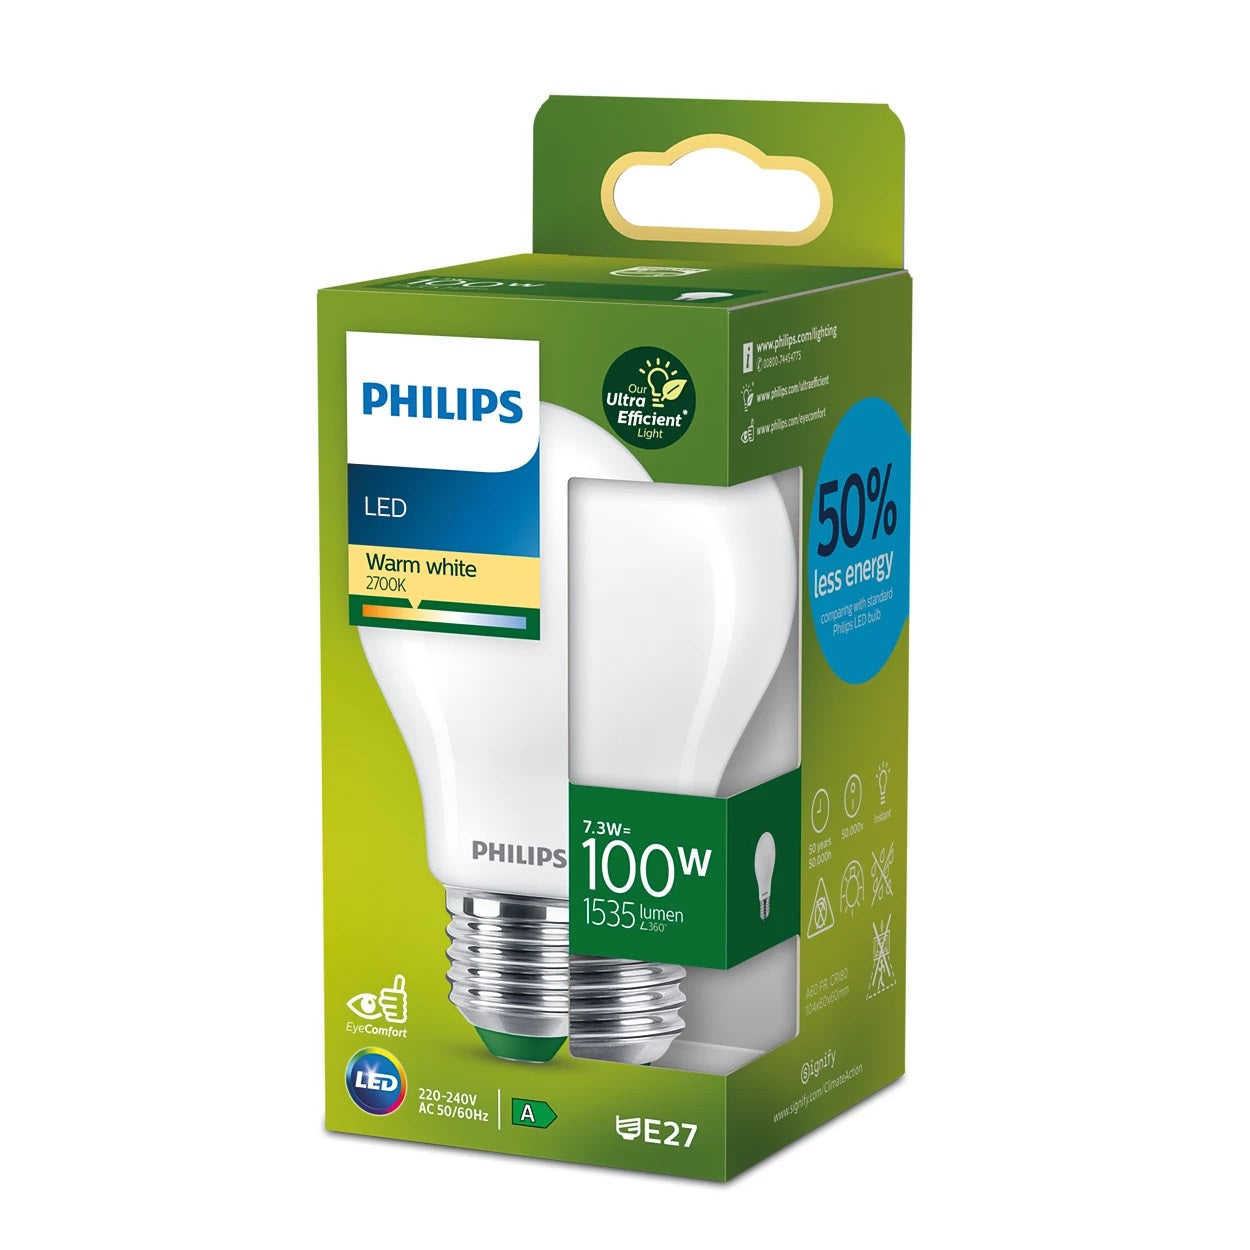 Philips Classic Filament LED bulb E27 CRI80 A-Class frosted 7.3-100W 2700K 1535lm